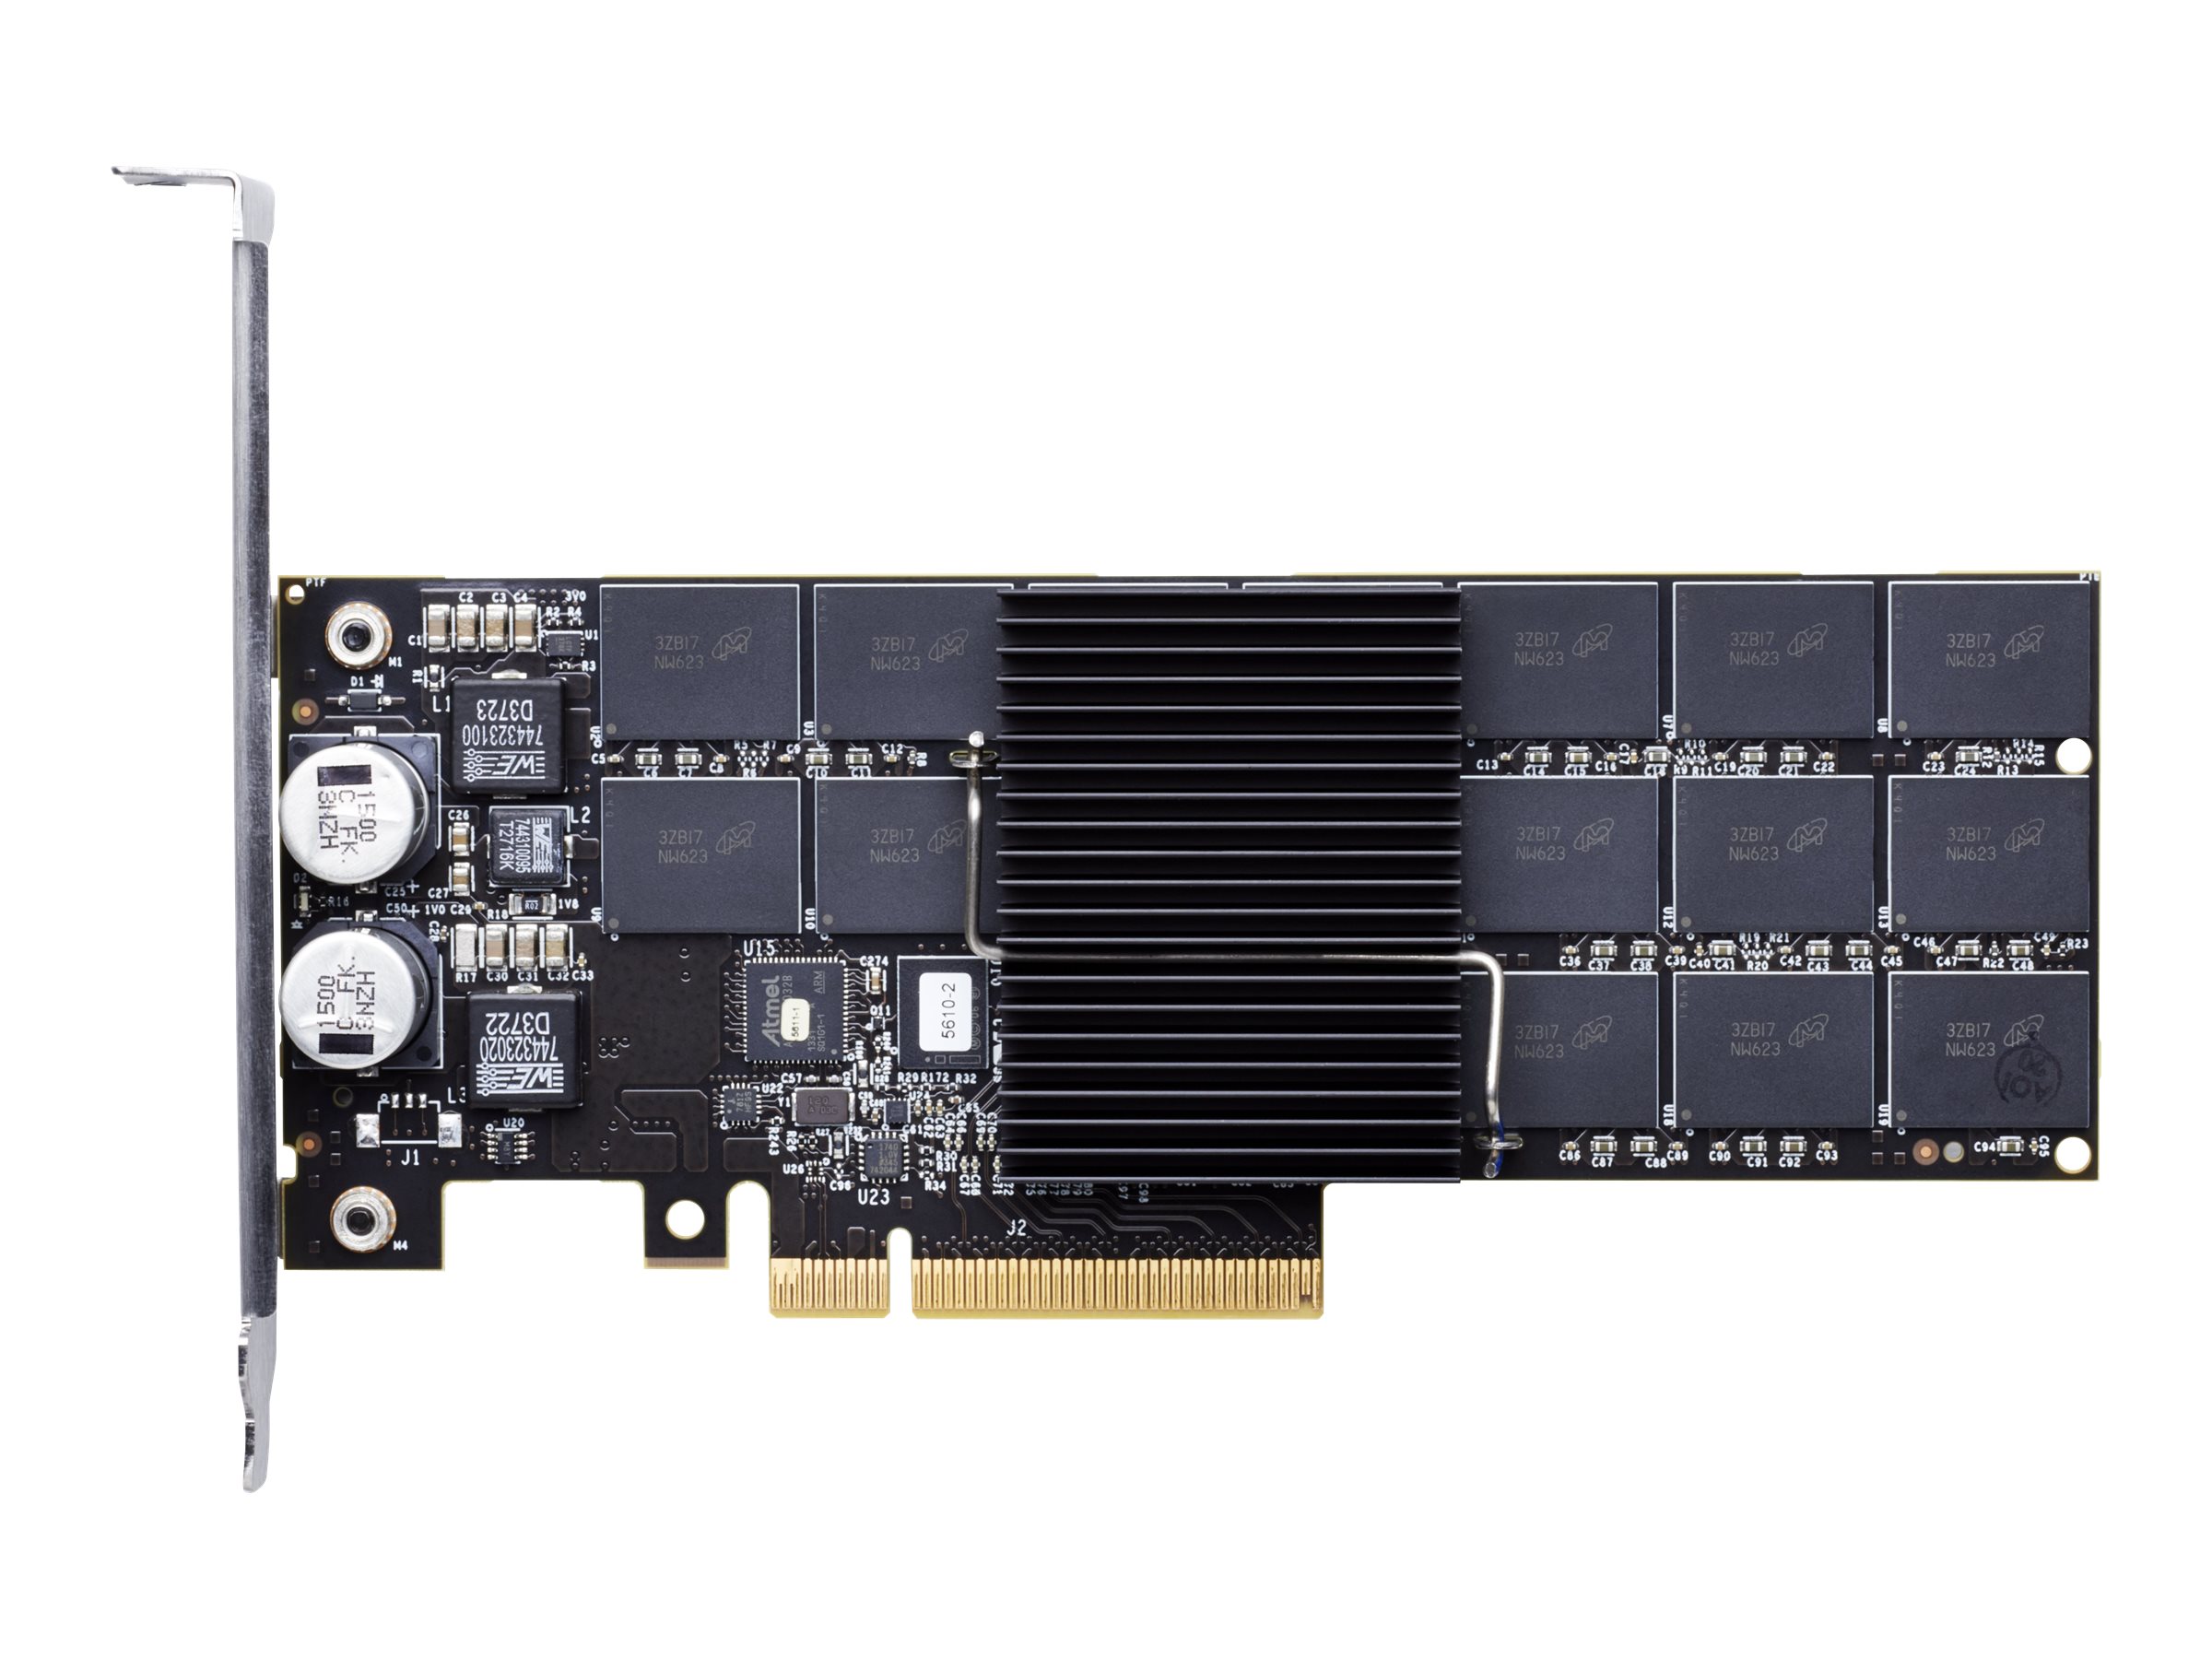 HP 785GB MLC G2 PCIe IO Accelerator (673644-B21) - REFURB